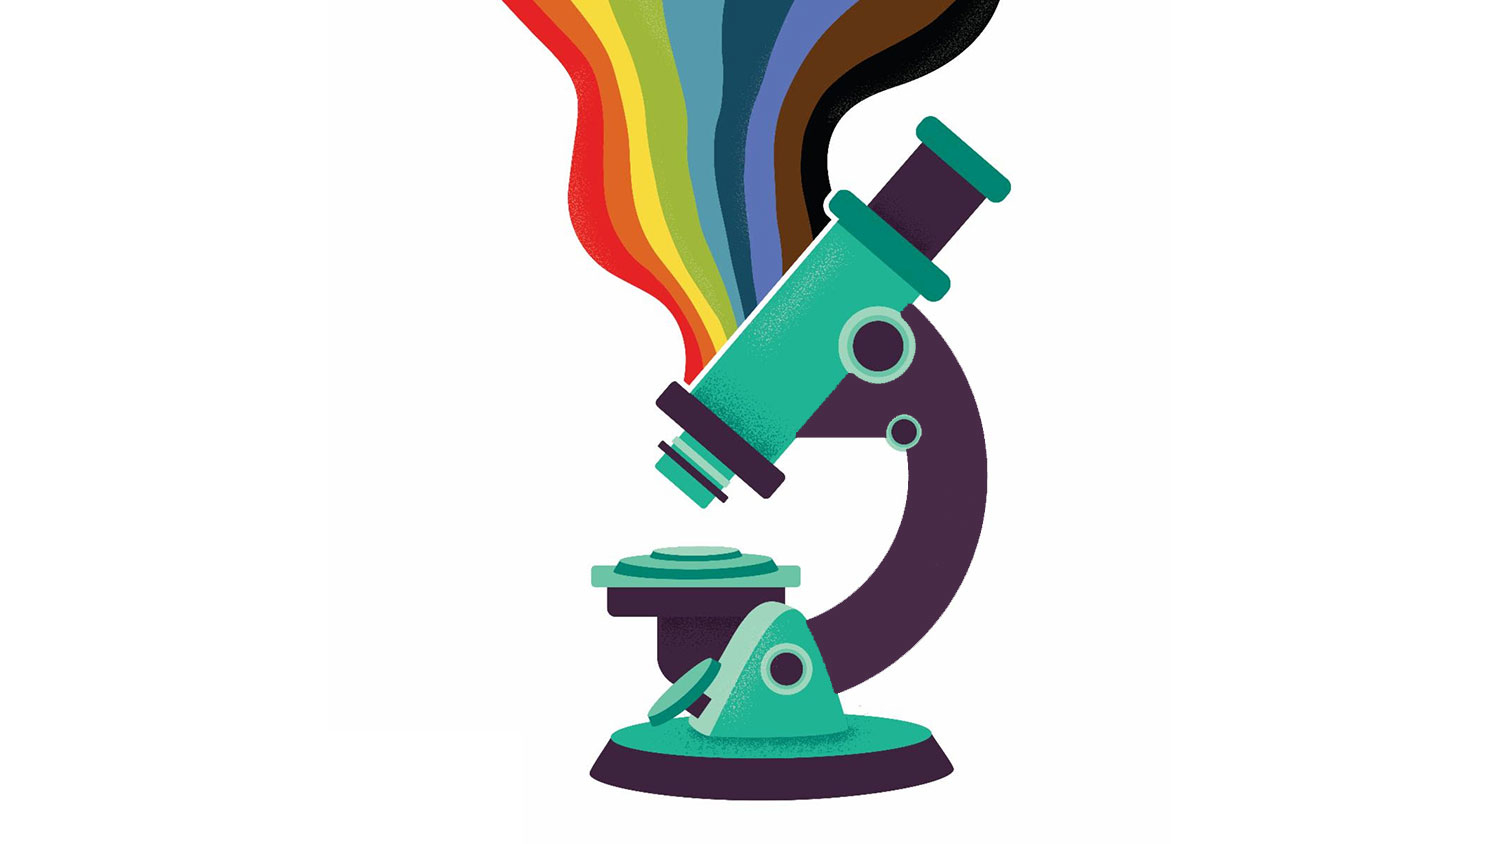 Microscope with LGBTQ+ rainbow